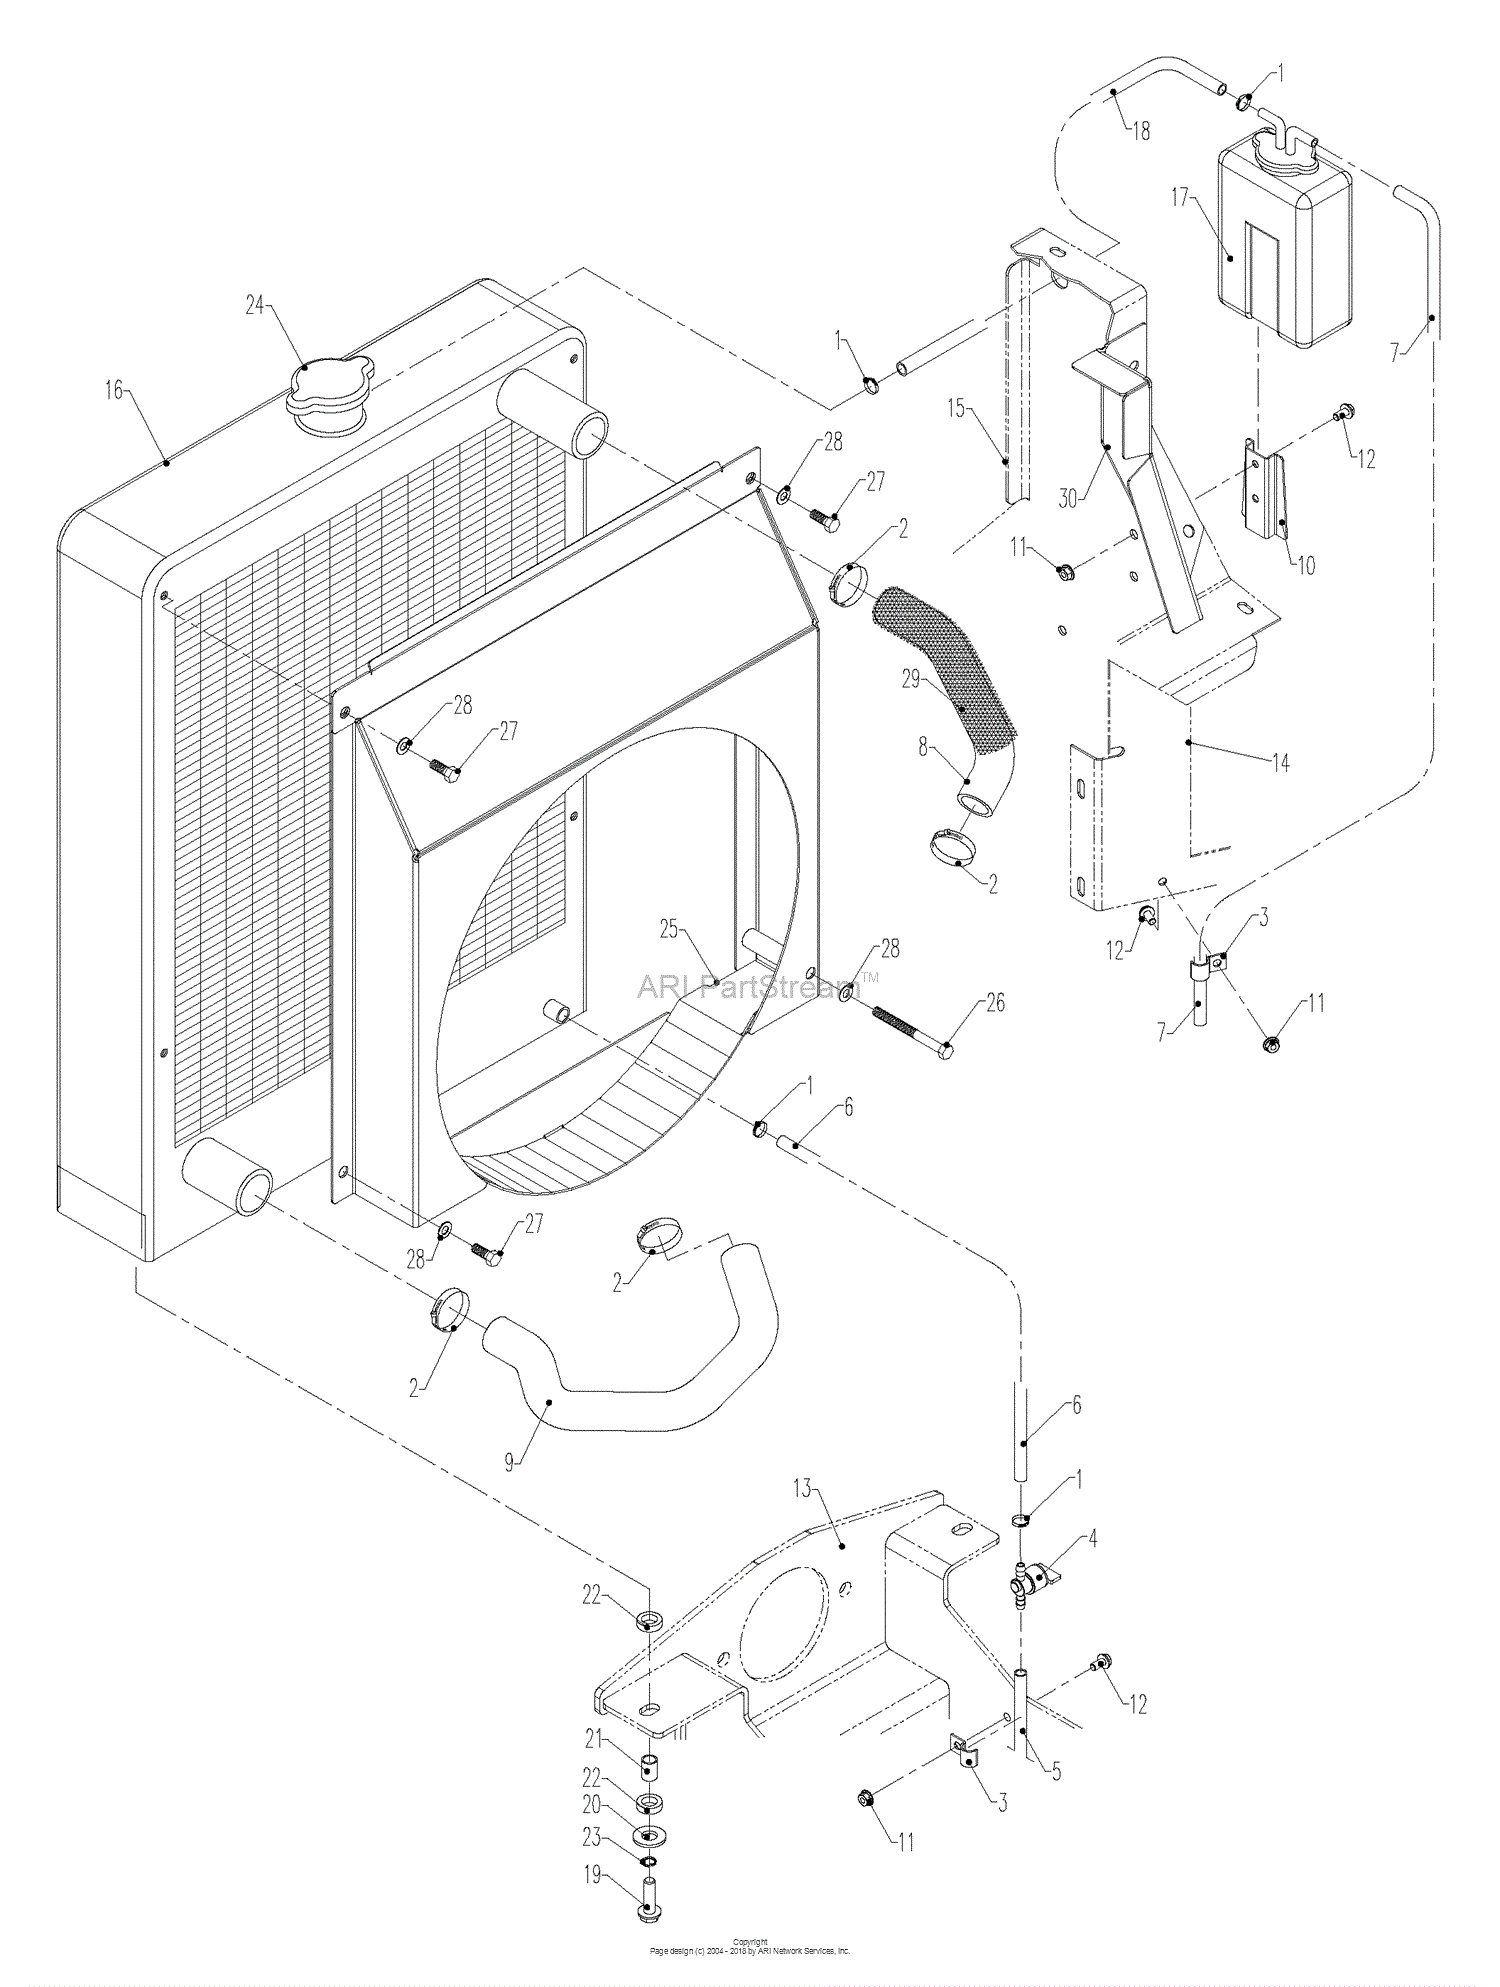 Wiring Diagram Daihatsu Taft - commonsensicalkyrie